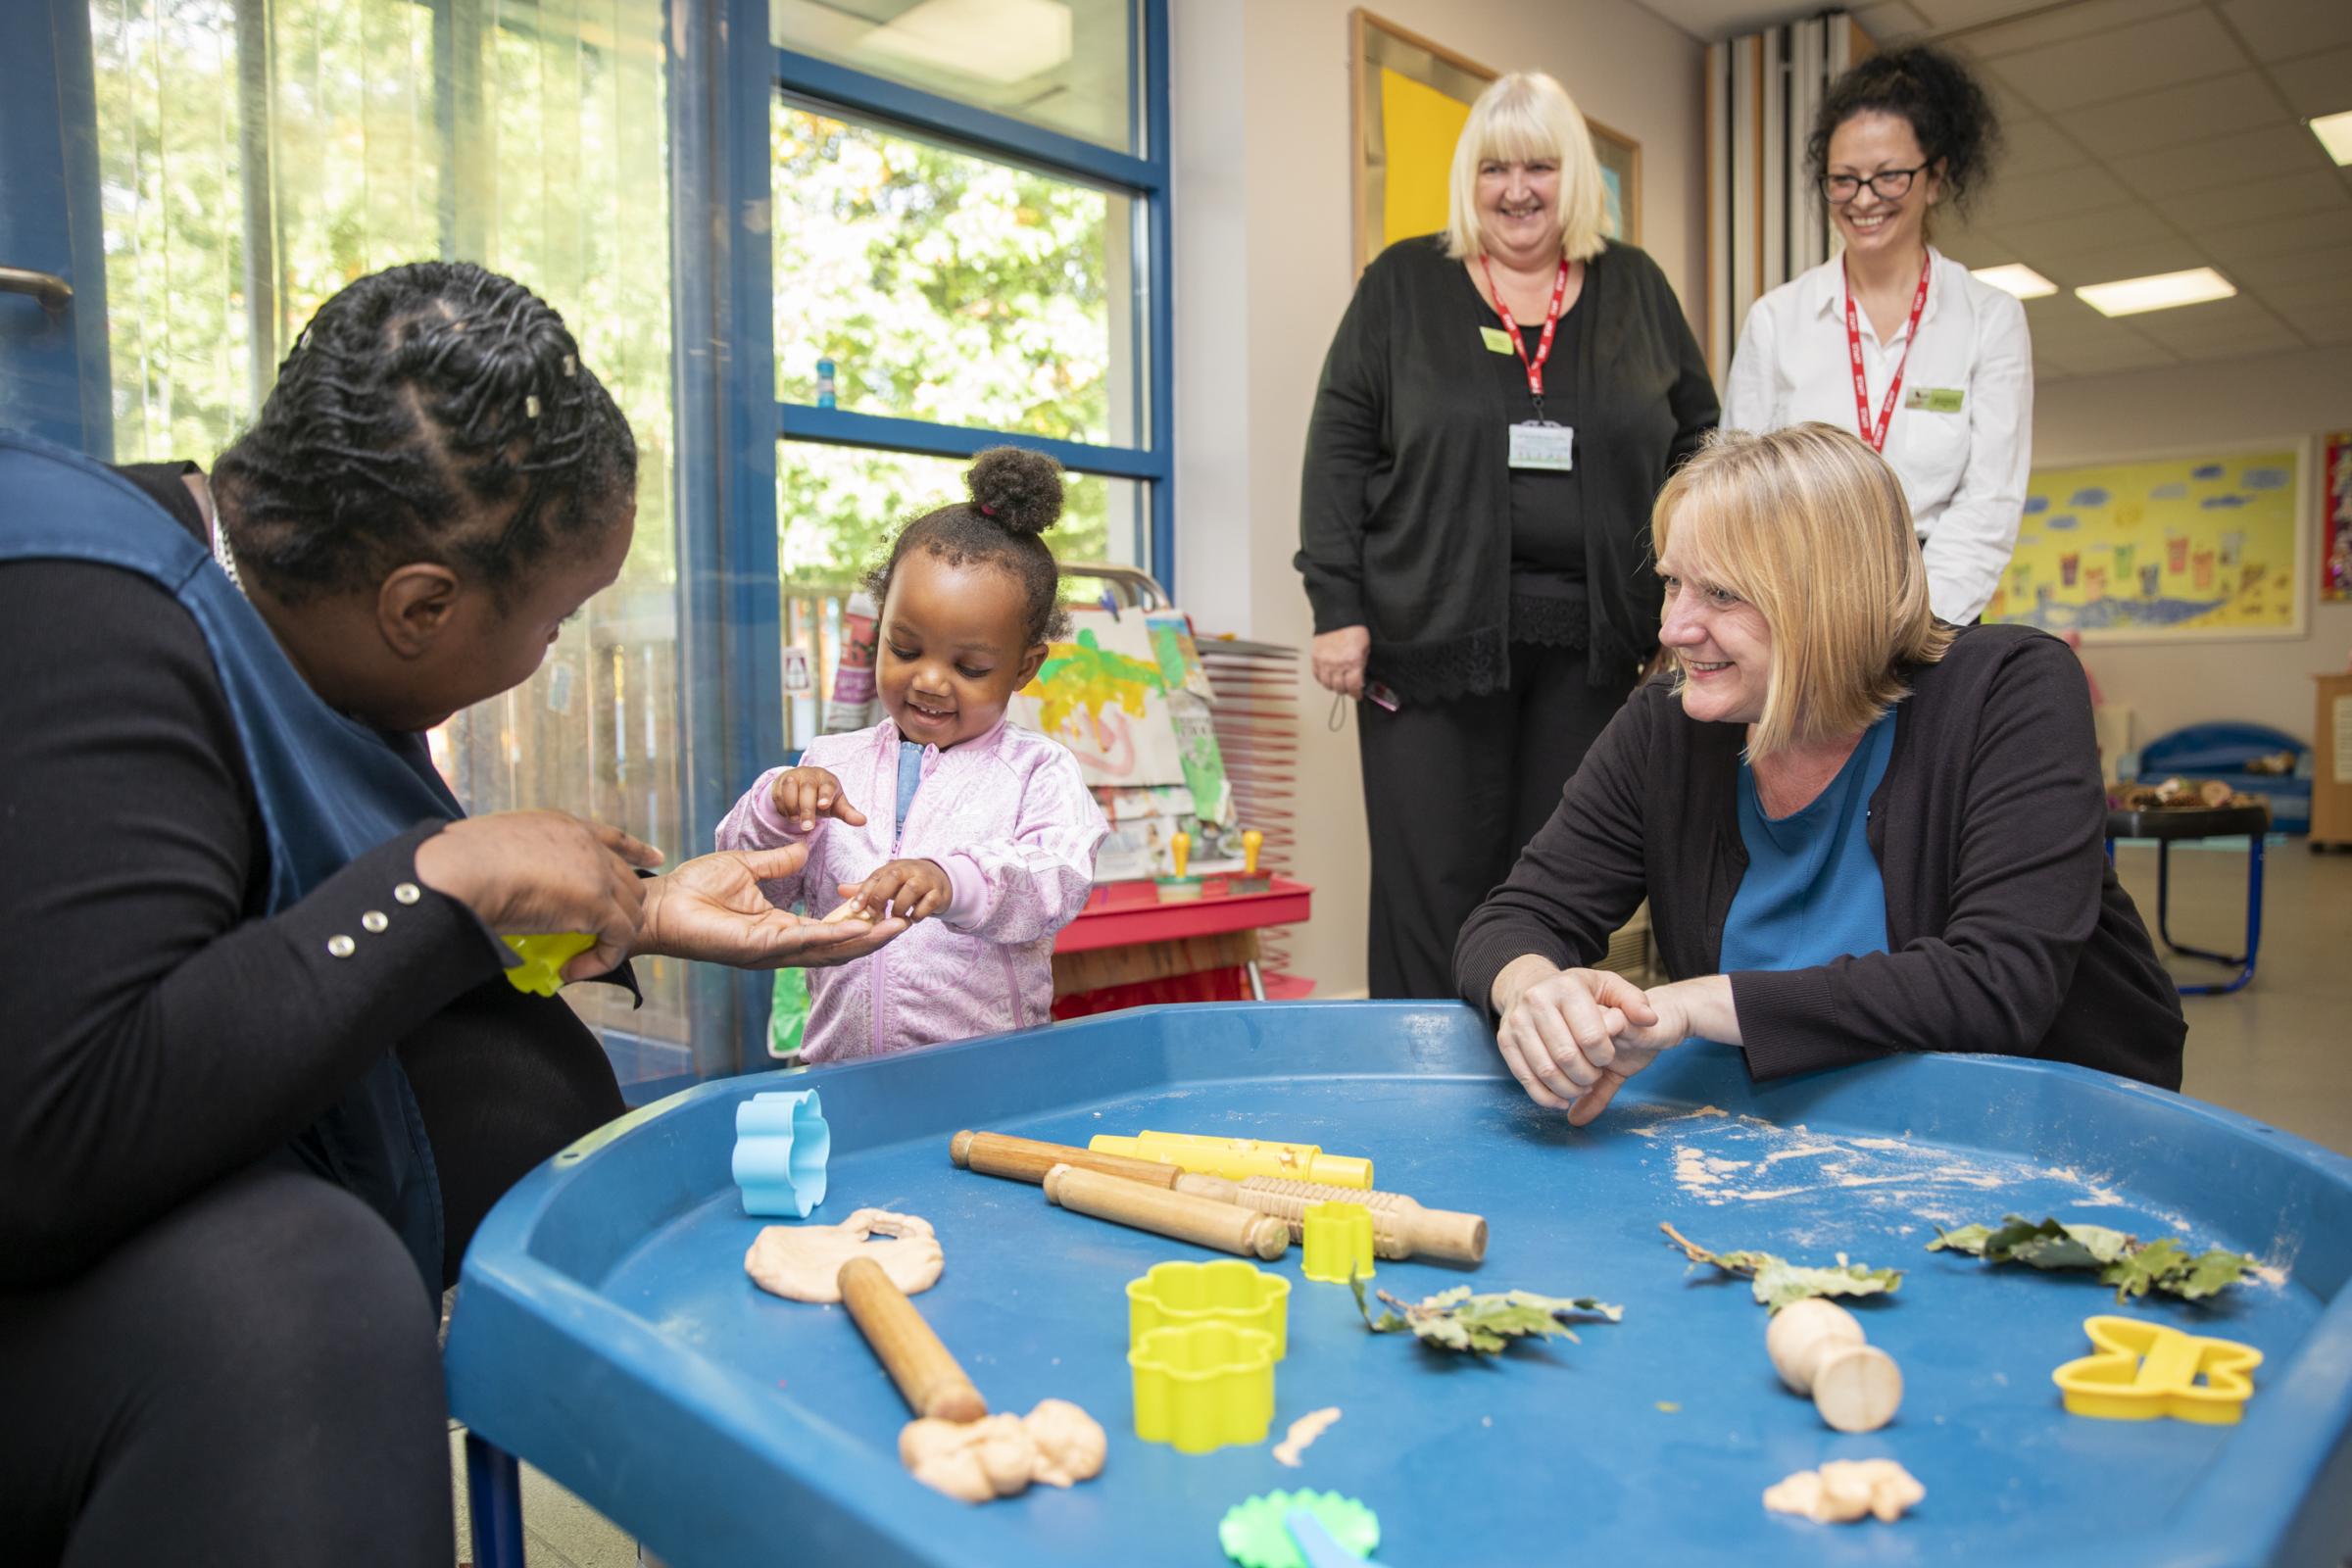 Deputy mayor celebrates Wandsworth playschool’s Early Years Hub success